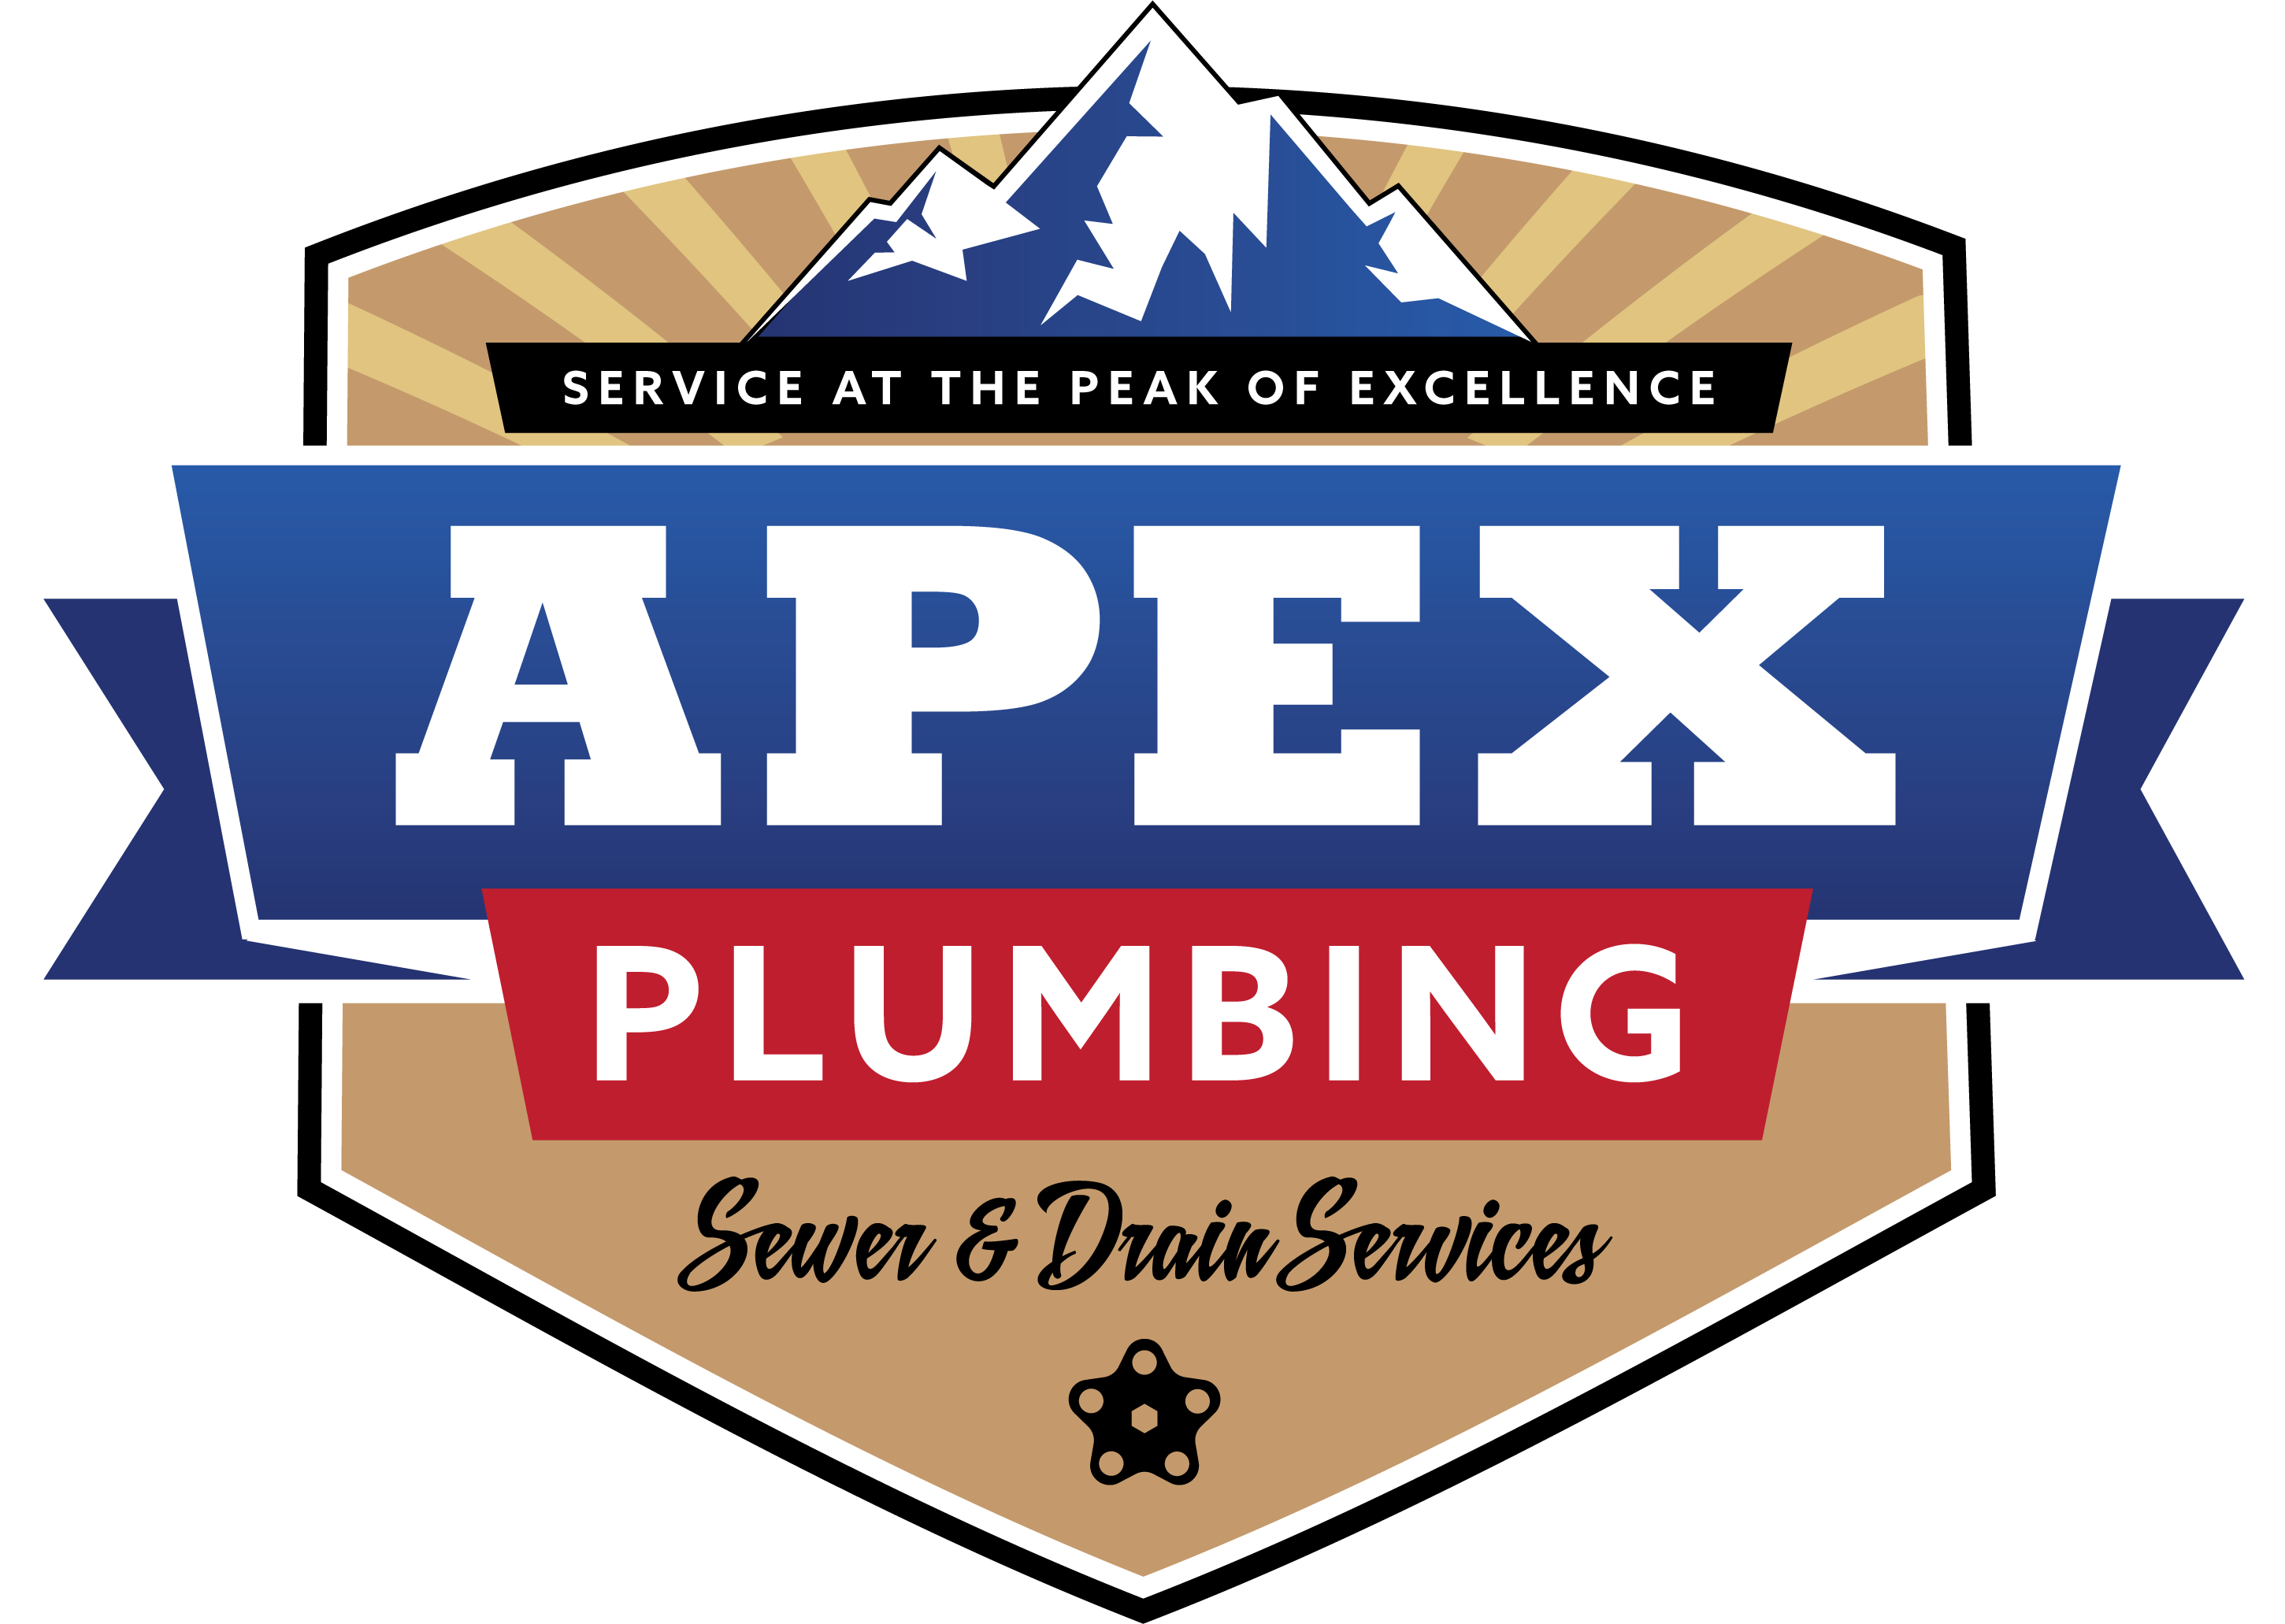 APEX Plumbing